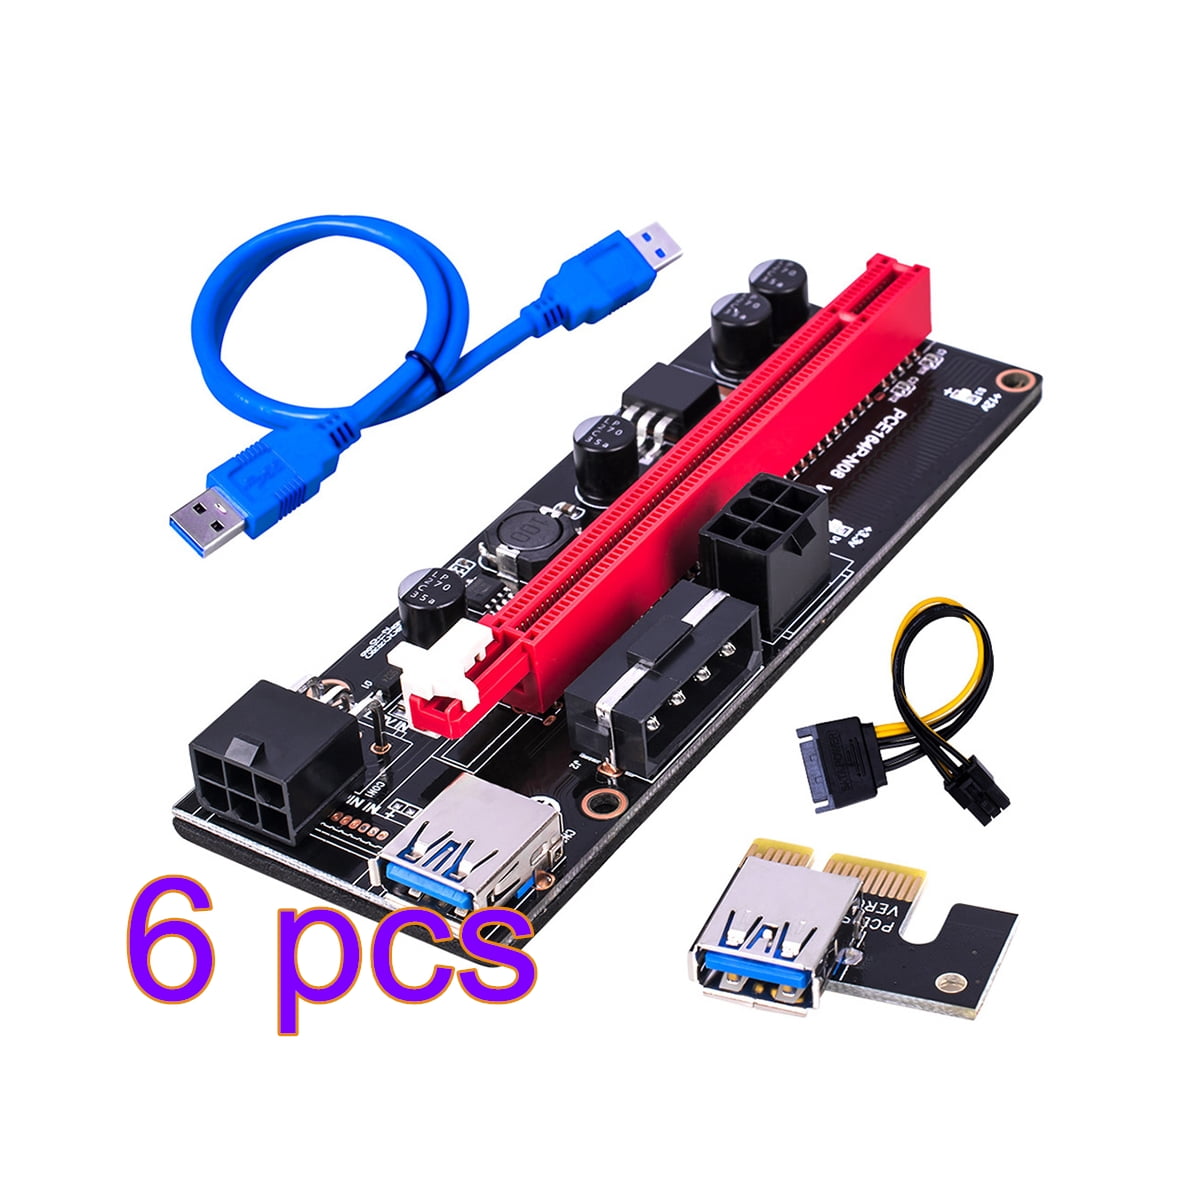 6 PACK SATA 009S Blue PCI-E 1X to 16X9 Raiser Card with Blue 60cm USB 3.0 Cable 